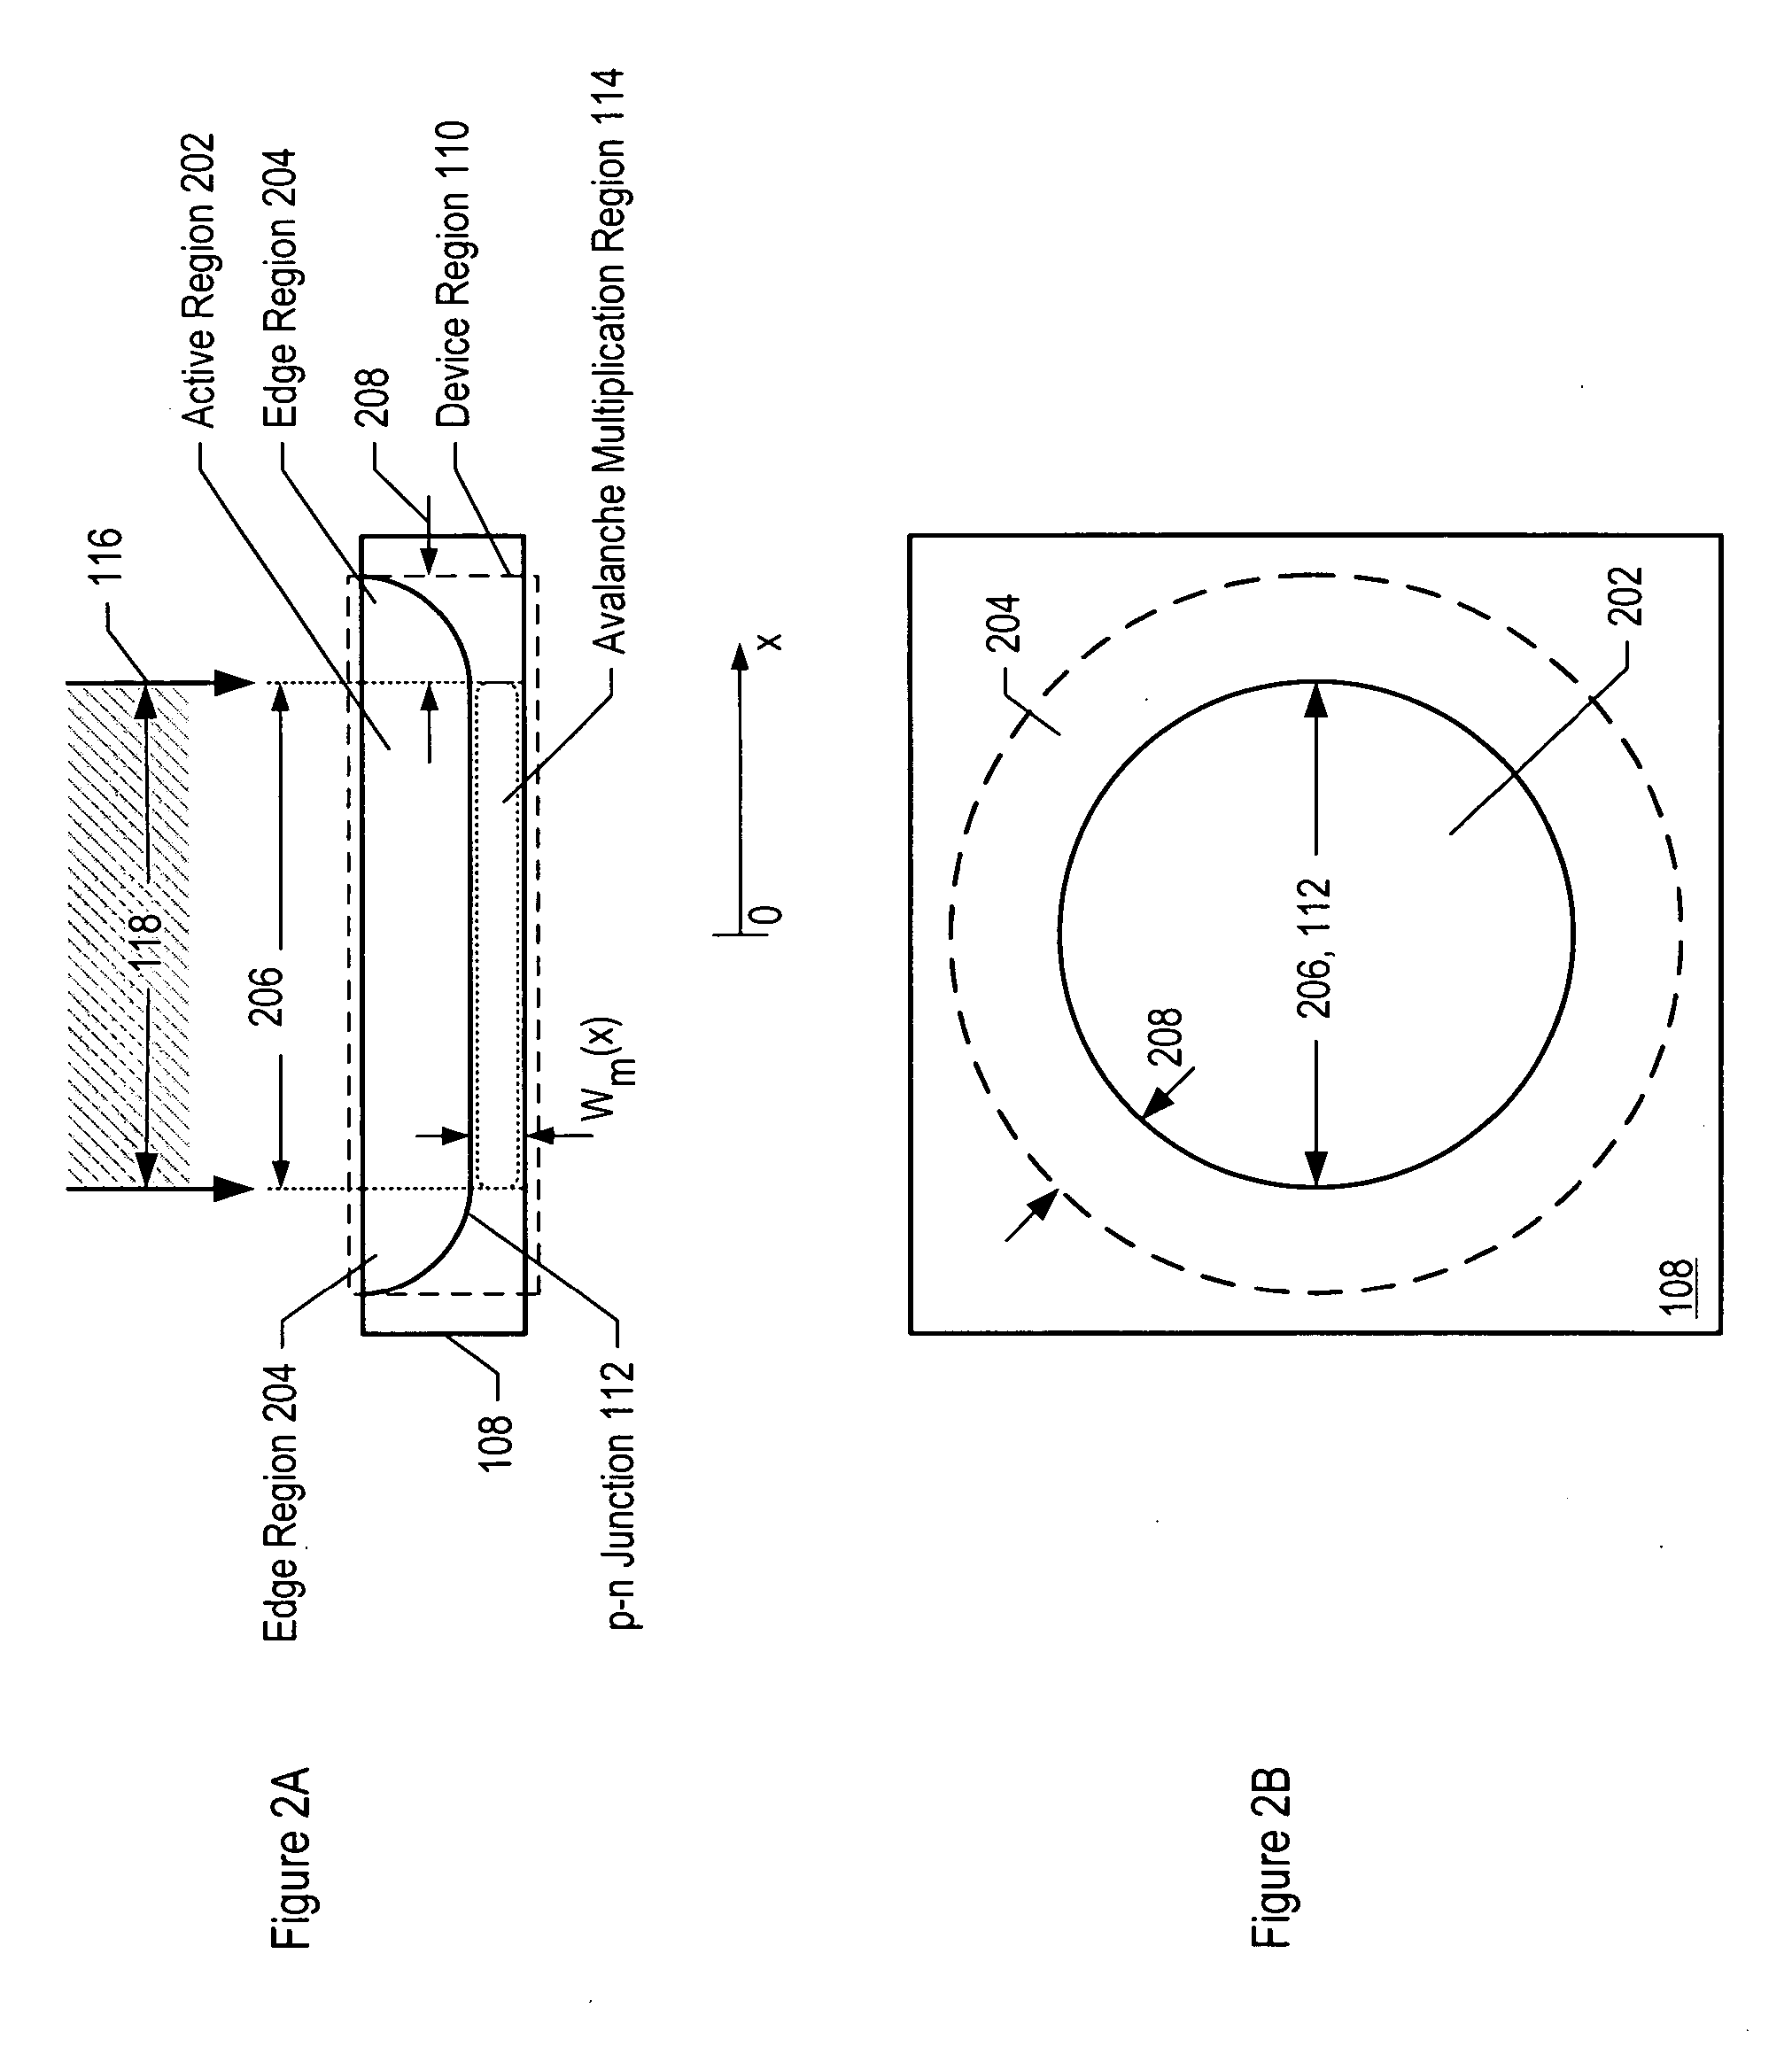 Apparatus comprising an avalanche photodiode